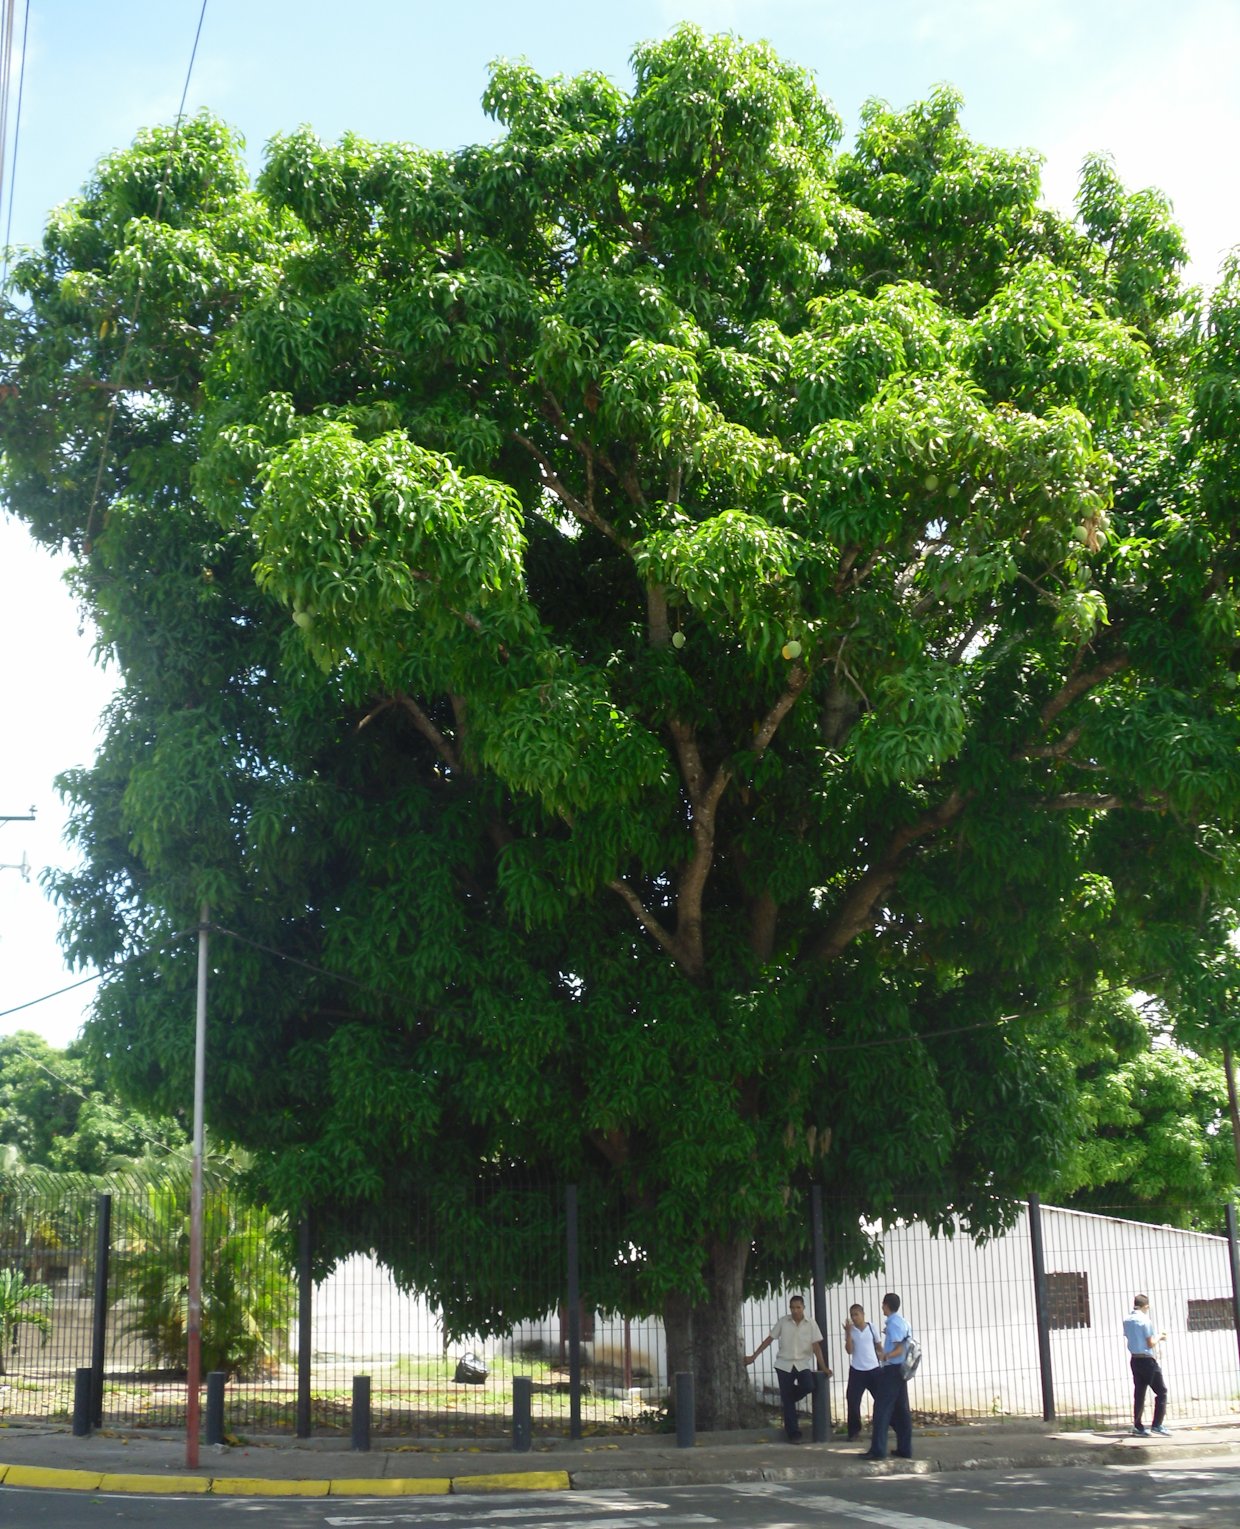 Guayana: Eje Sur Upata Santa Elena de Uairén: Árboles de Upata: Mangifera  indica o mango, excepcional regalo de Asia al trópico americano